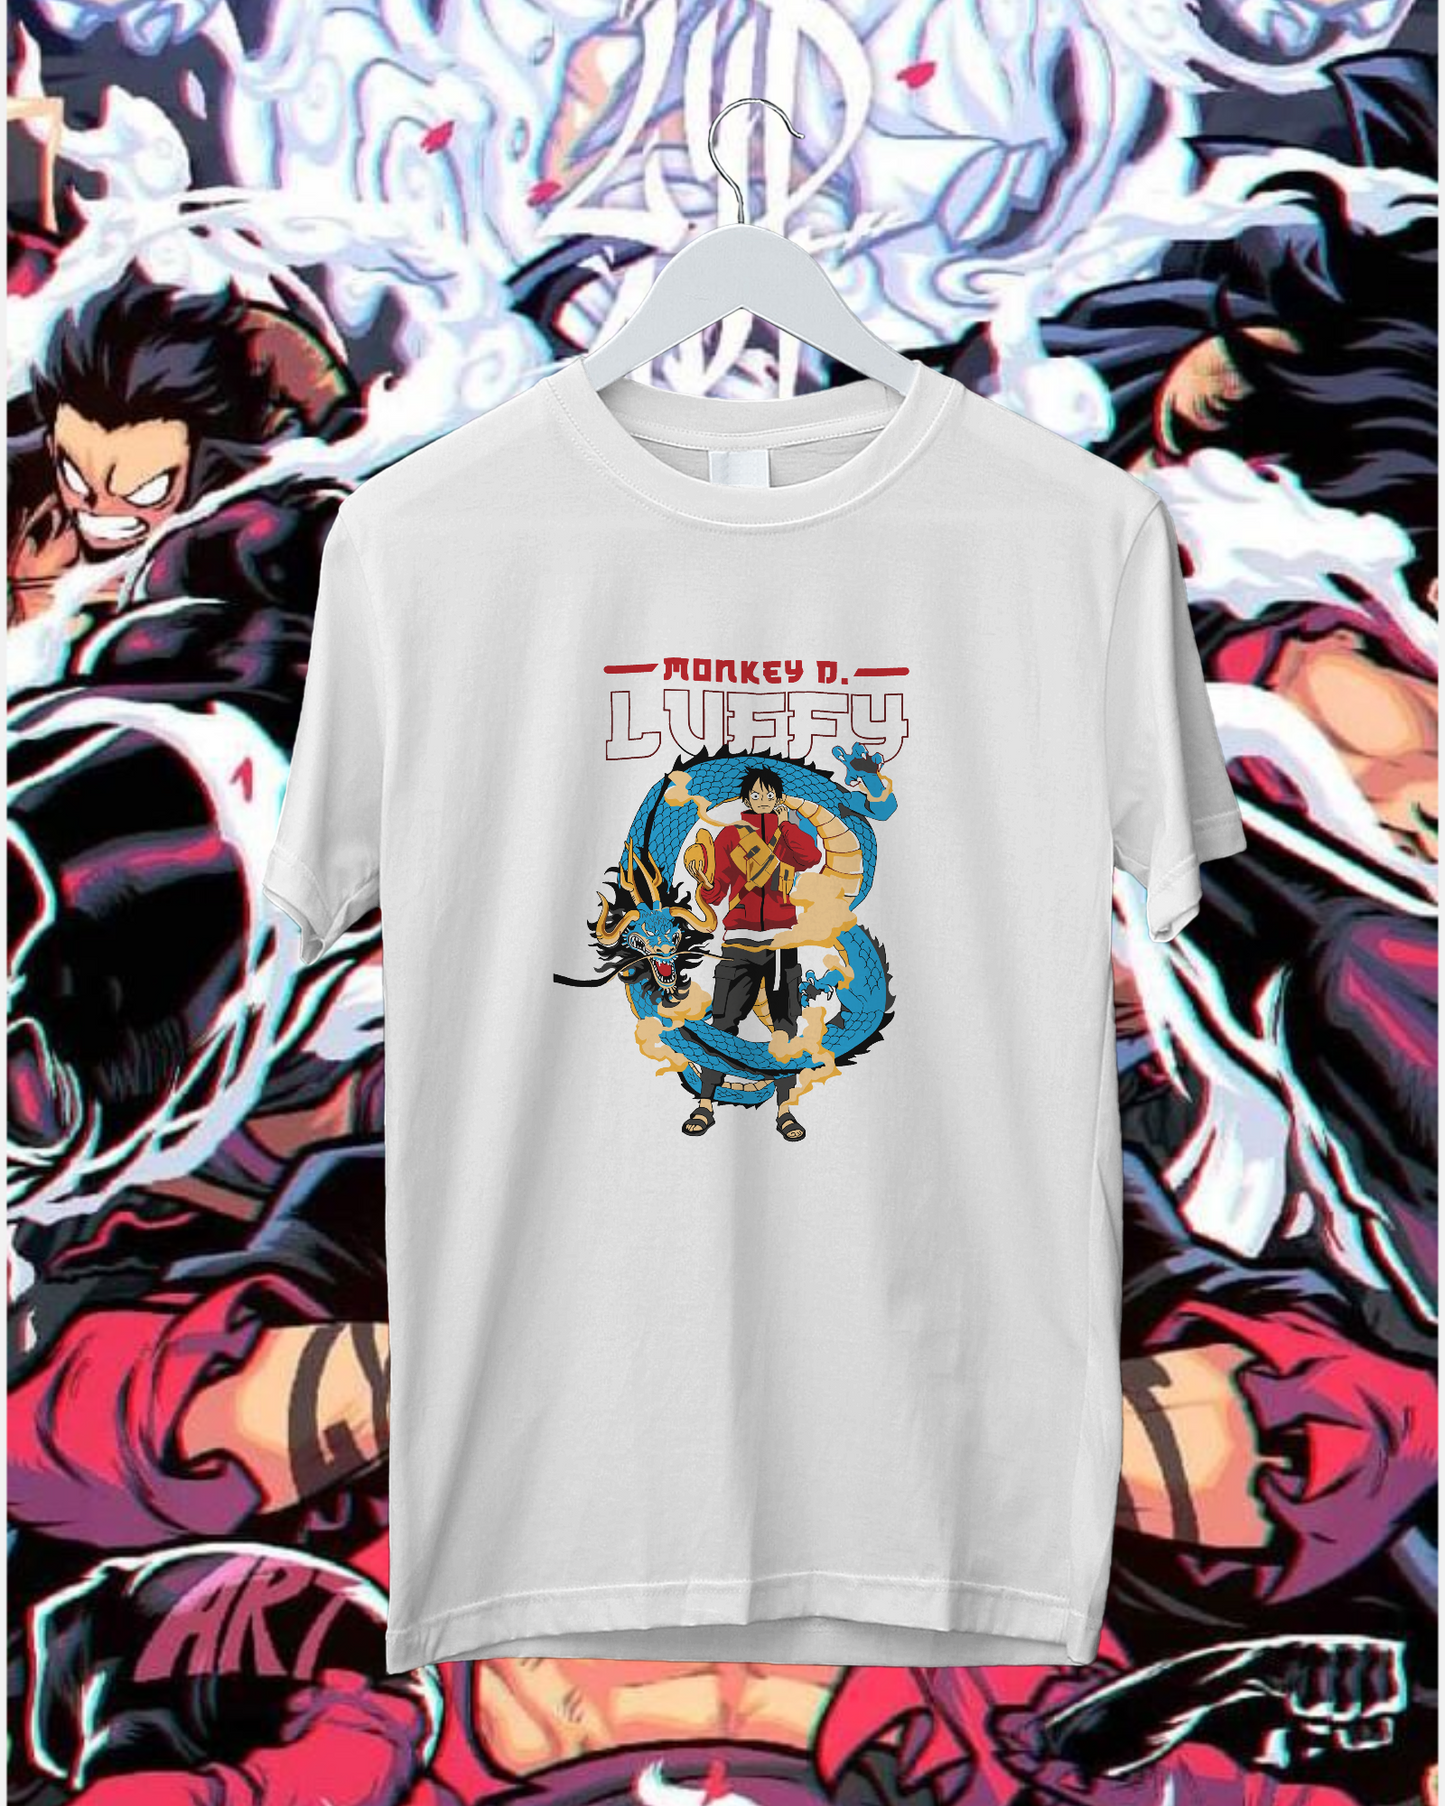 Men's One Piece Half Sleeve T-shirt